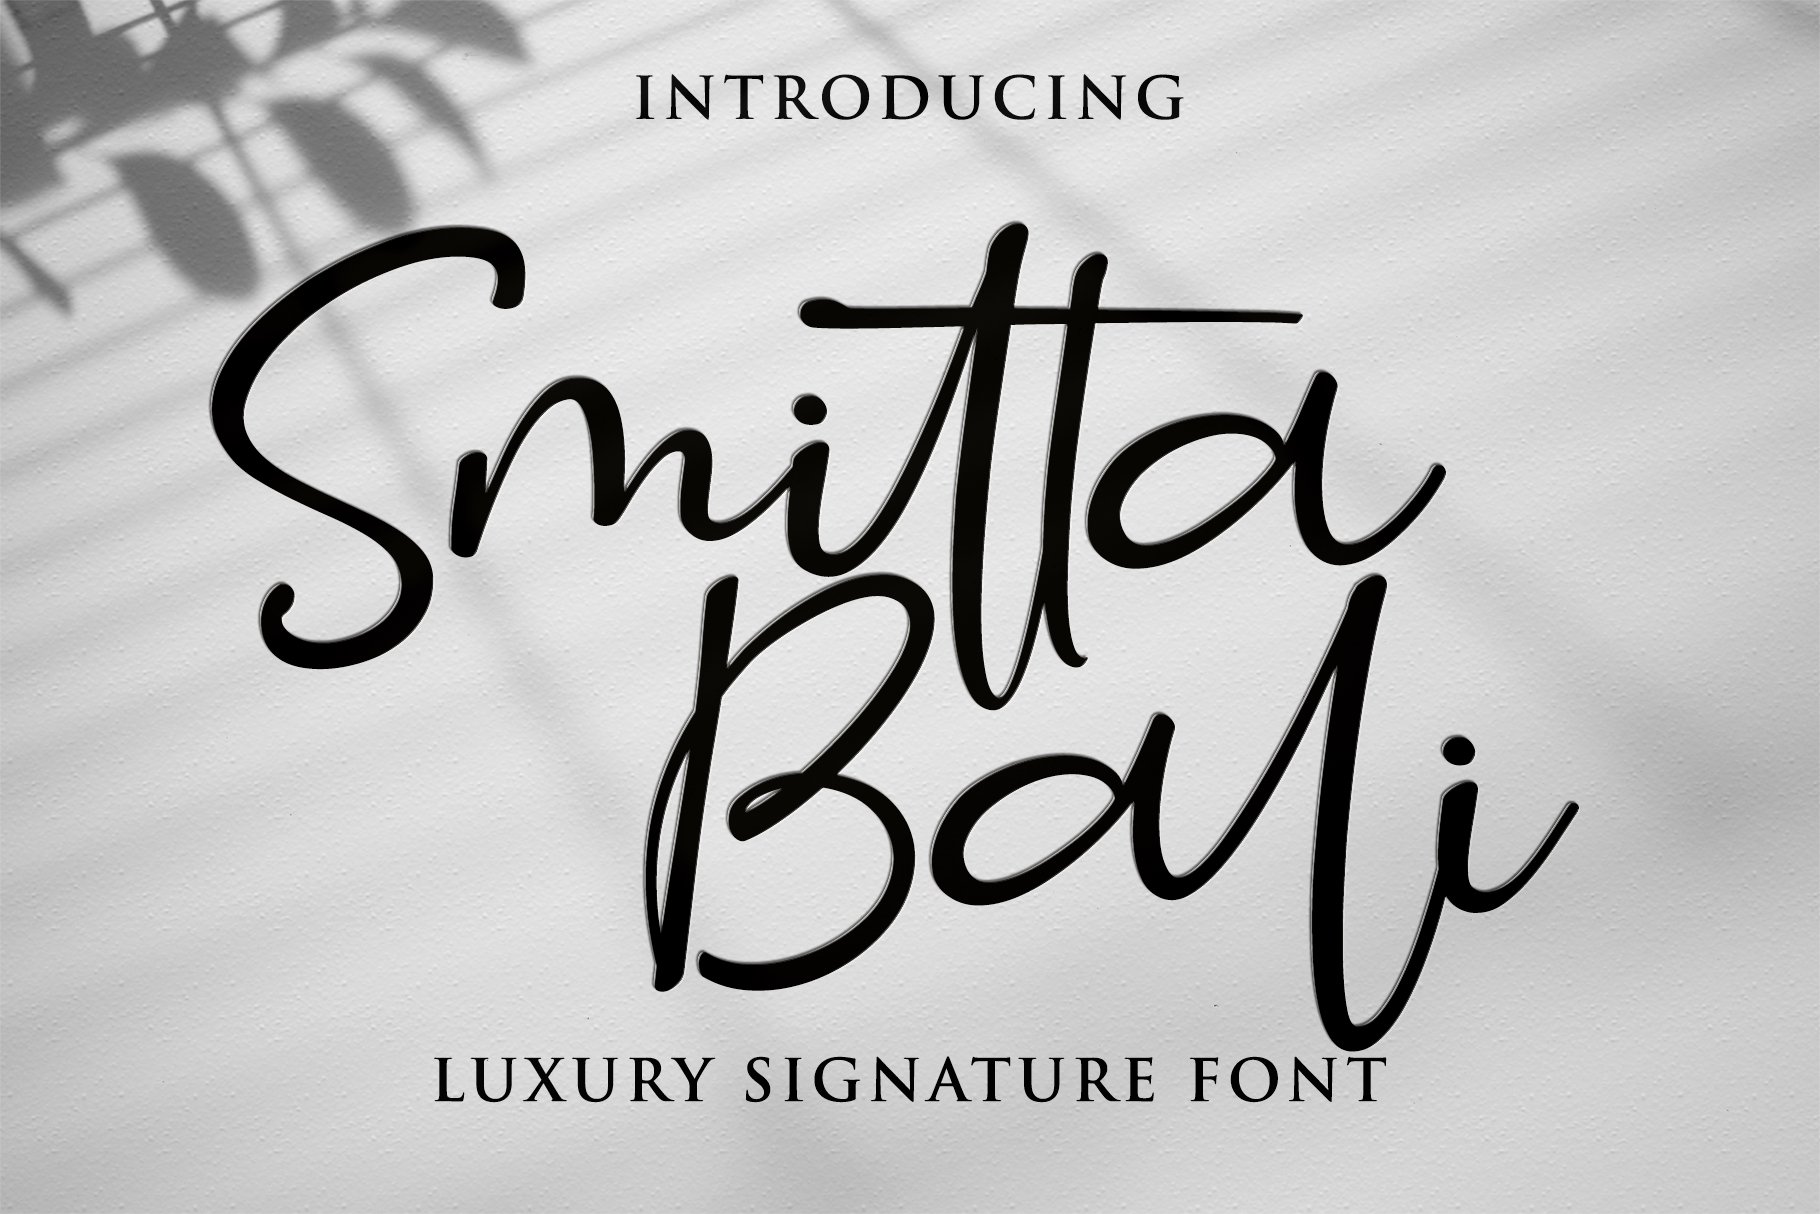 Smitta Bali - Luxury Signature Font cover image.